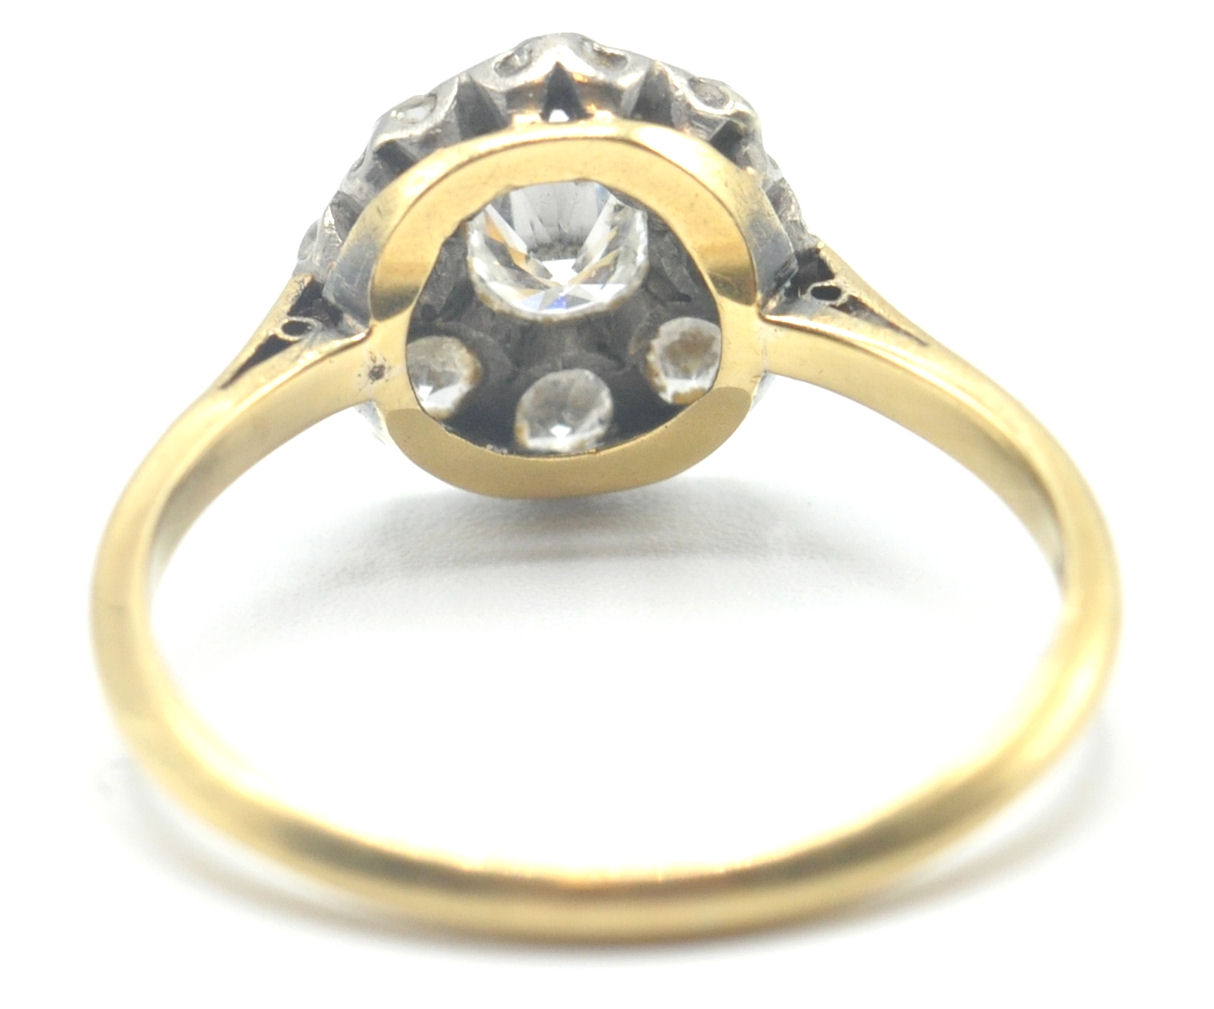 GOLD PLATINUM DIAMOND RING - Image 4 of 10